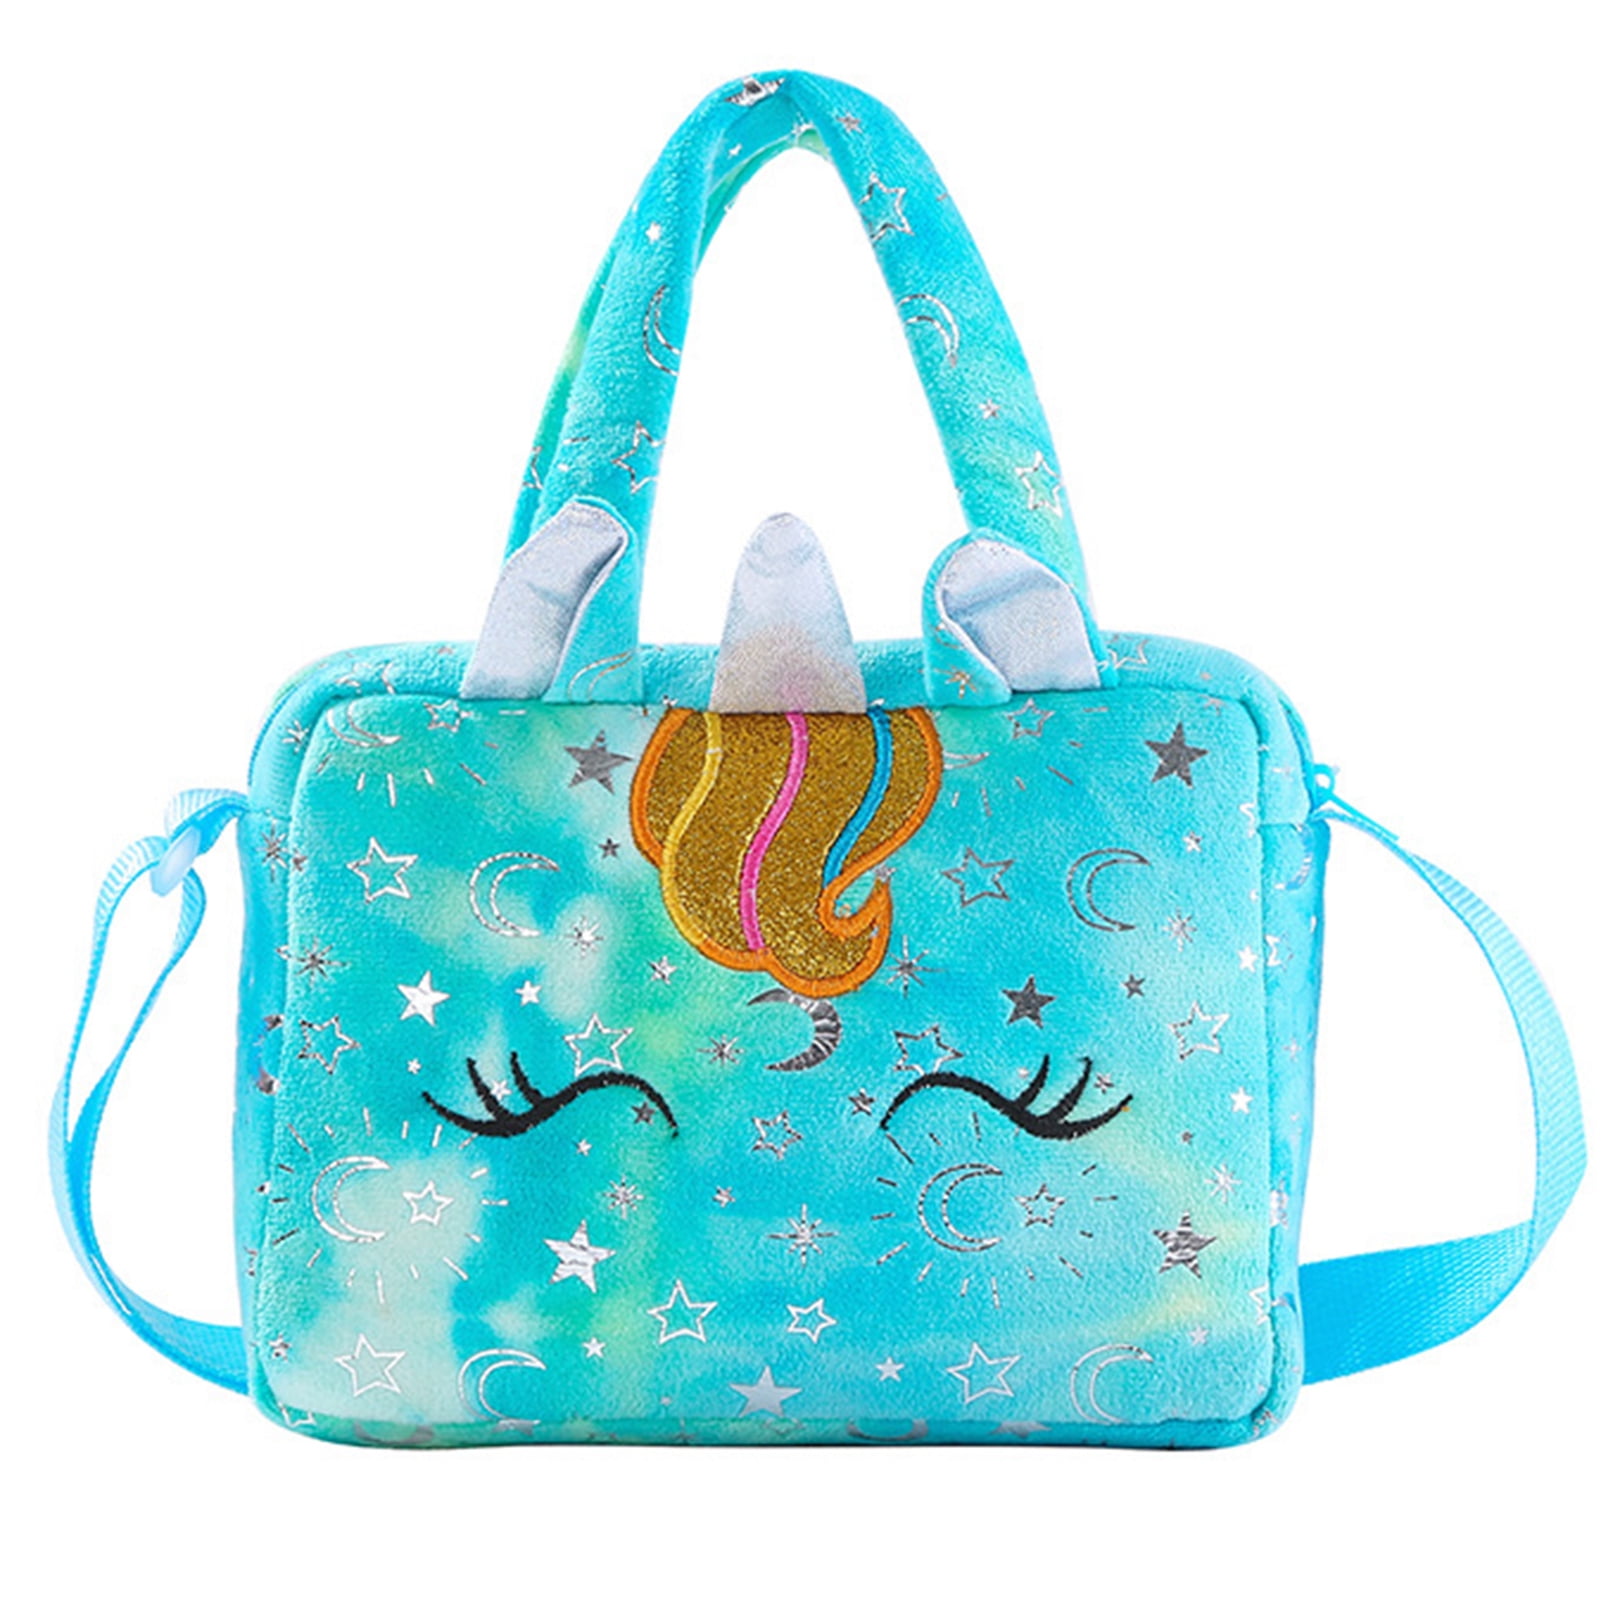 Hawaii Themed Satchel Neutral Colored Handbag Purse 15.5 X 8.5 Inches w/  Pocket | eBay